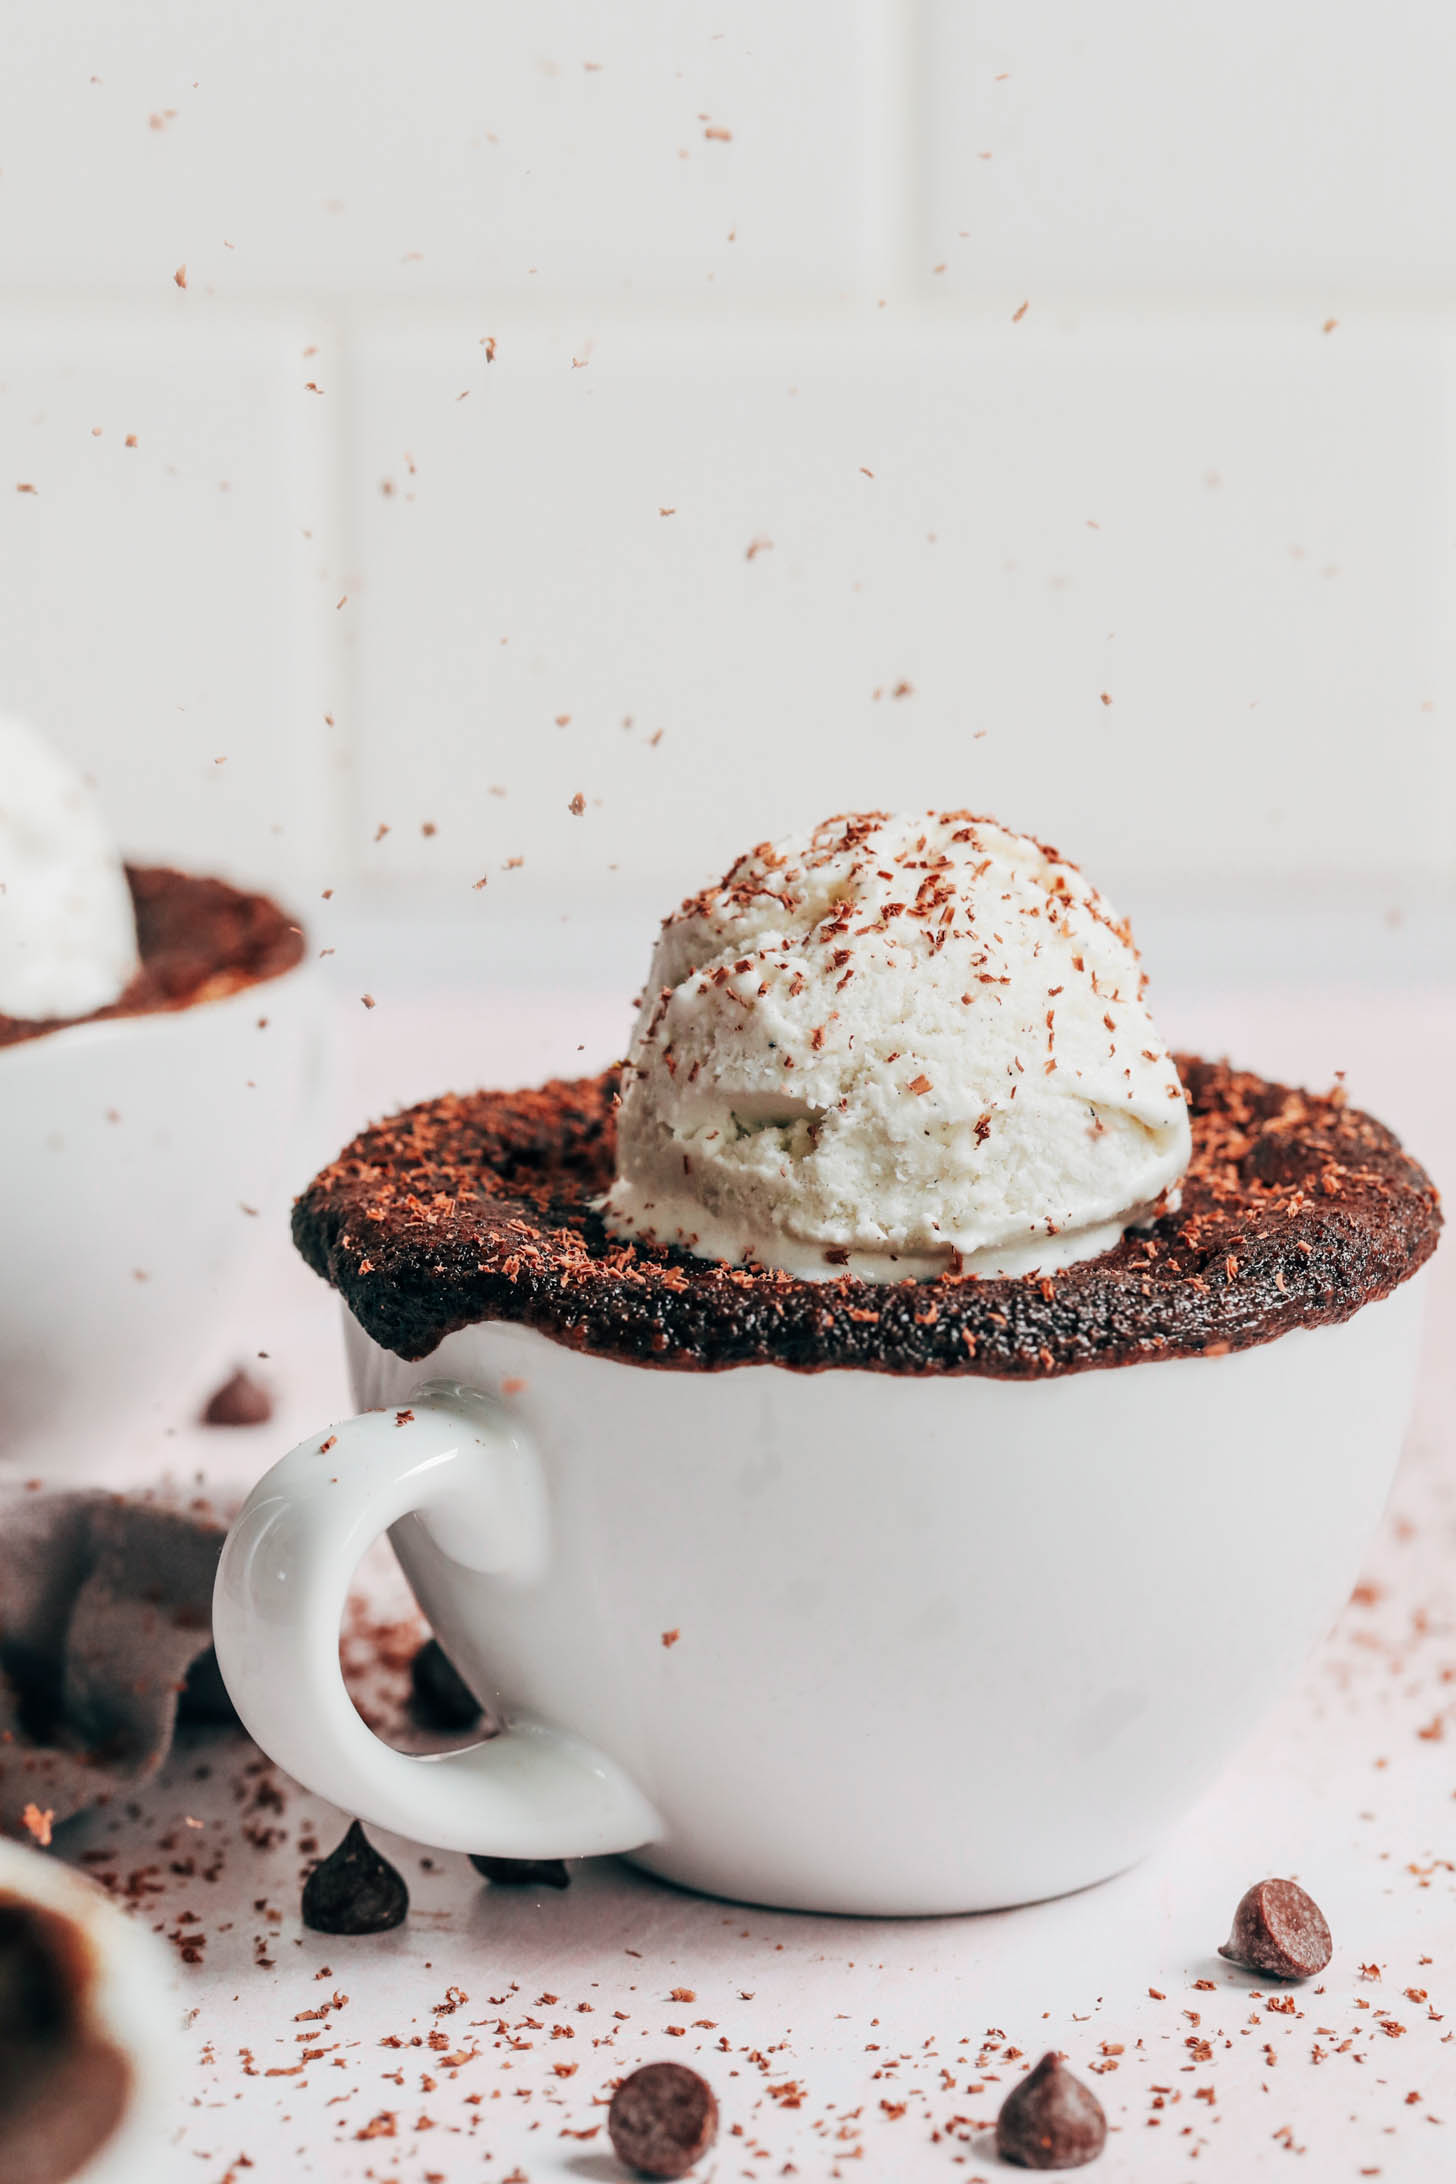 Shaved dark chocolate falling onto a scoop of vanilla ice cream on a chocolate mug cake